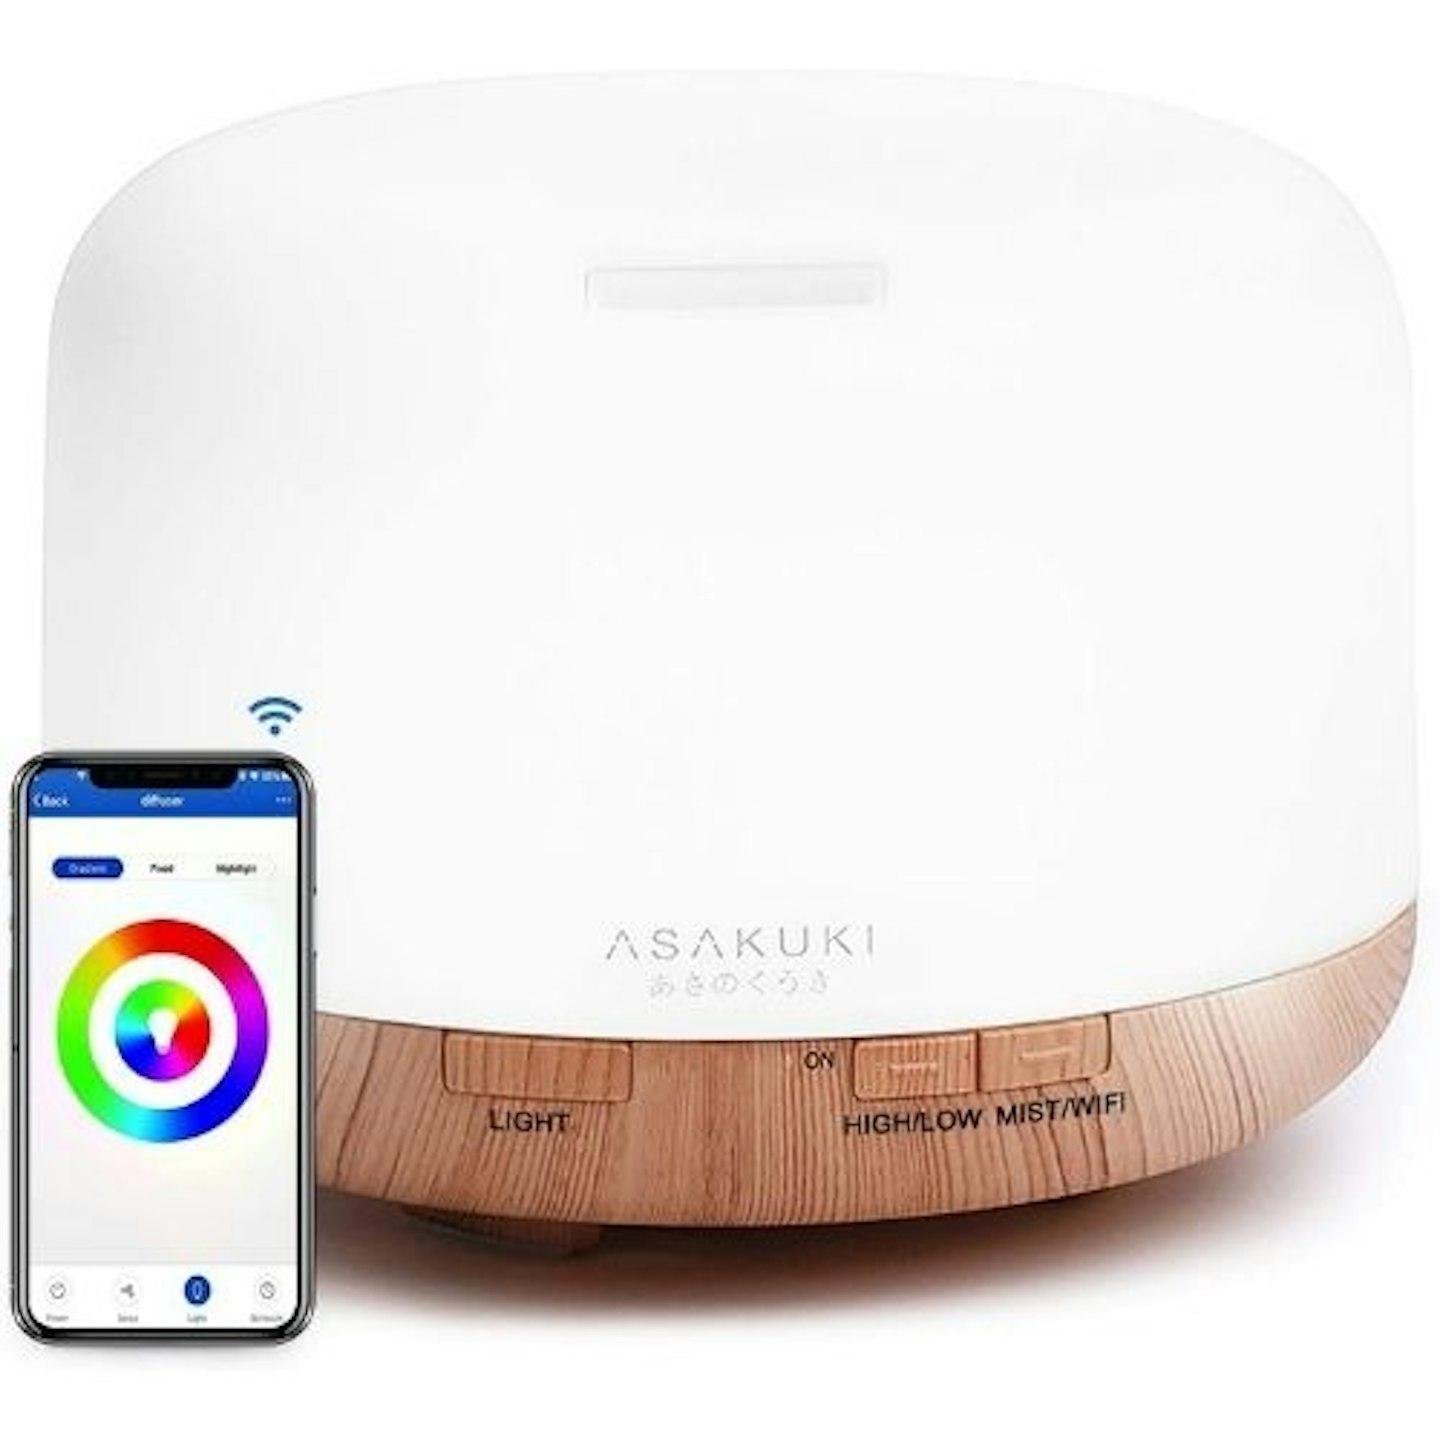 ASAKUKI Wi-Fi Smart Essential Oil Diffuser